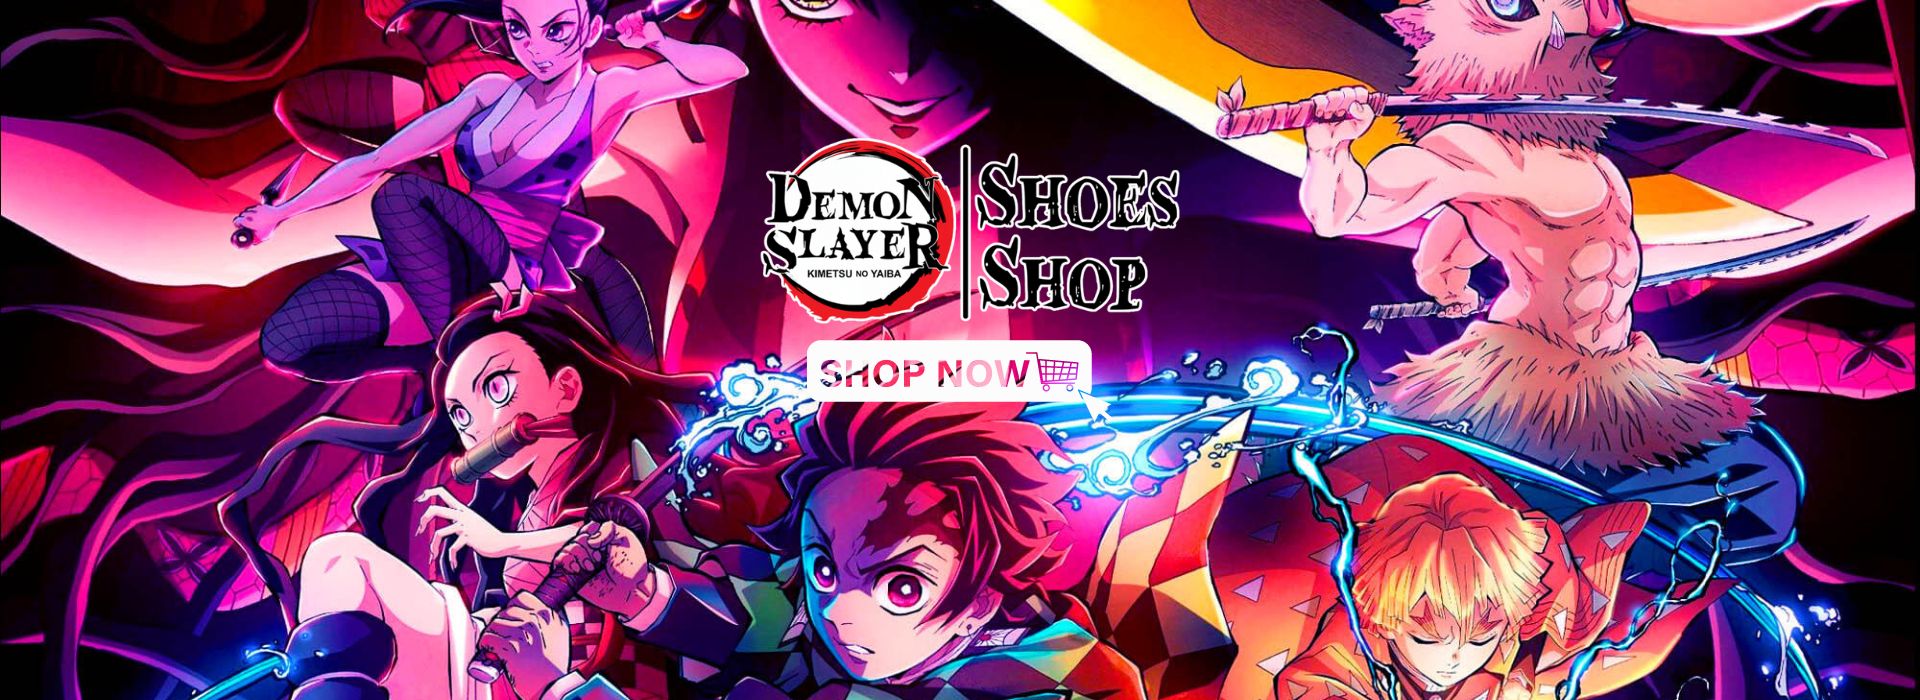 Demon Slayer Shoes Shop Banner